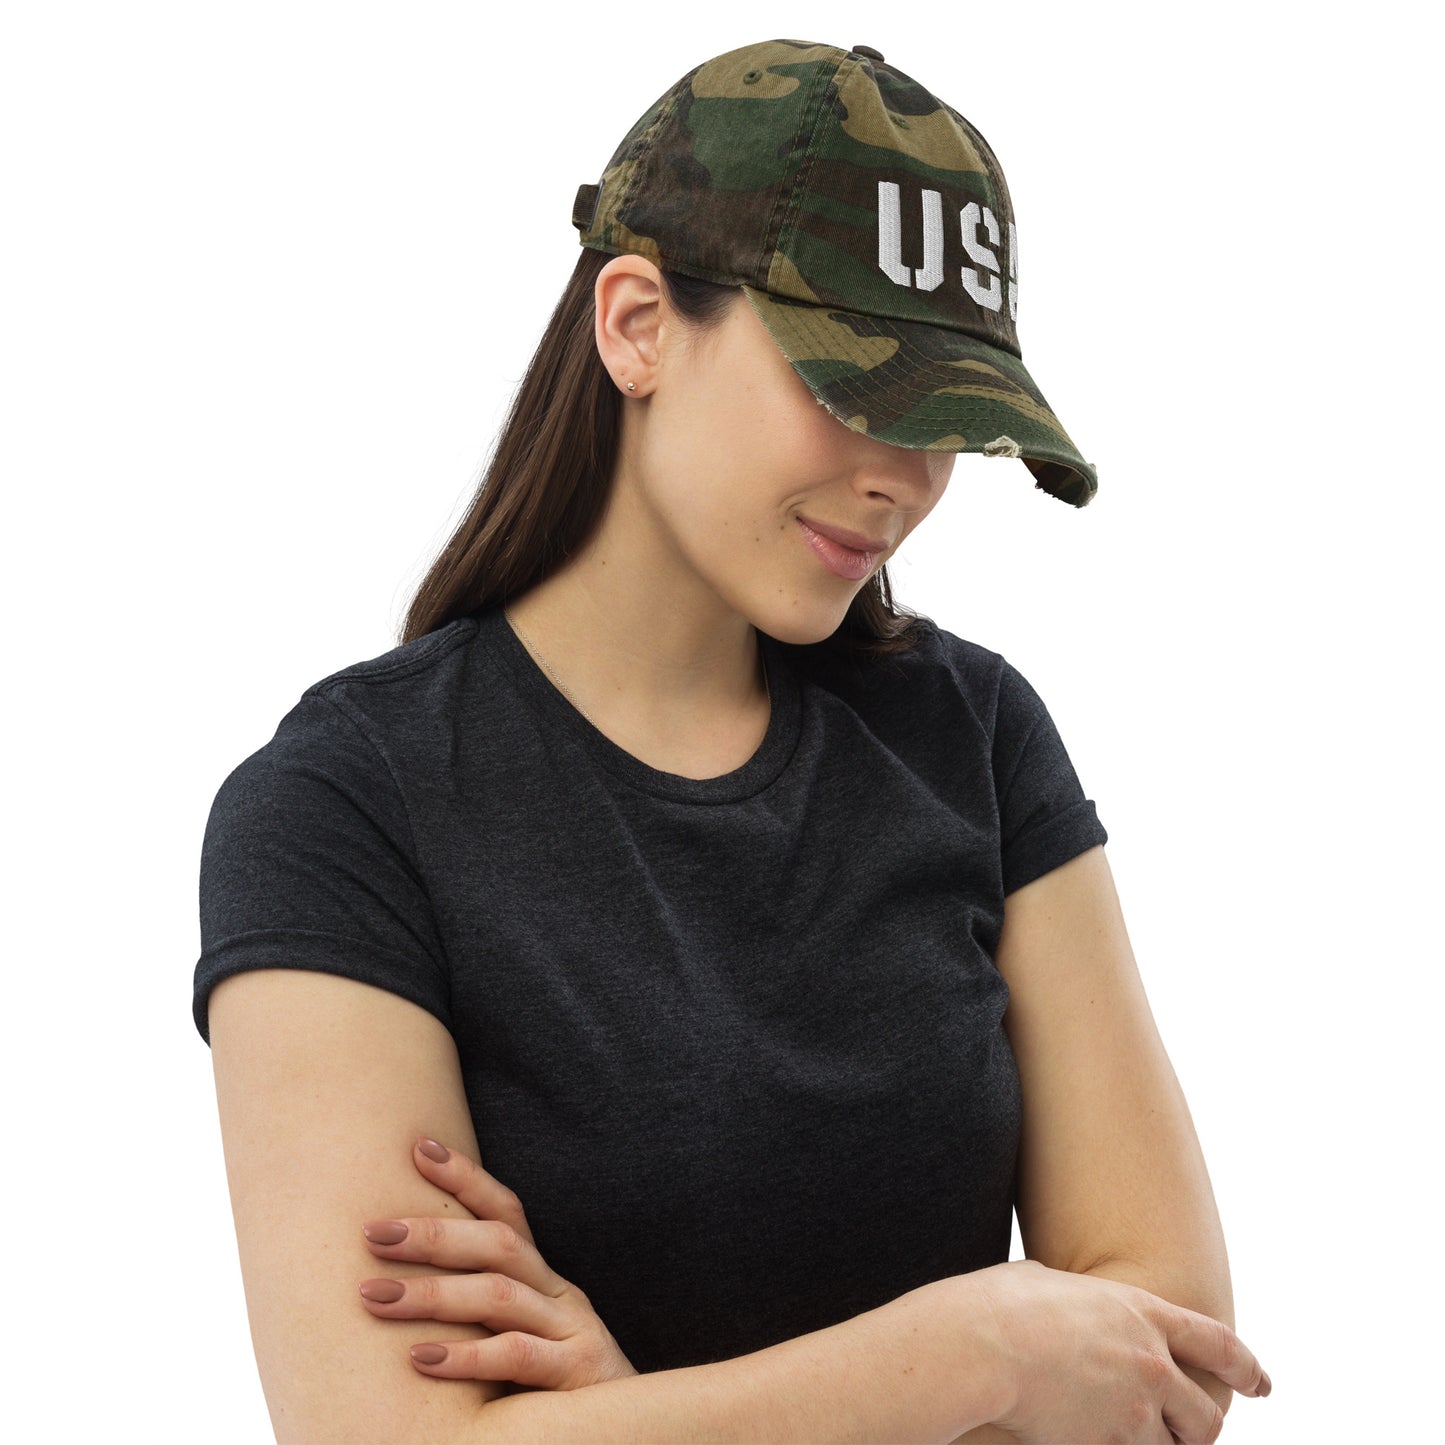 USA-Distressed ball cap